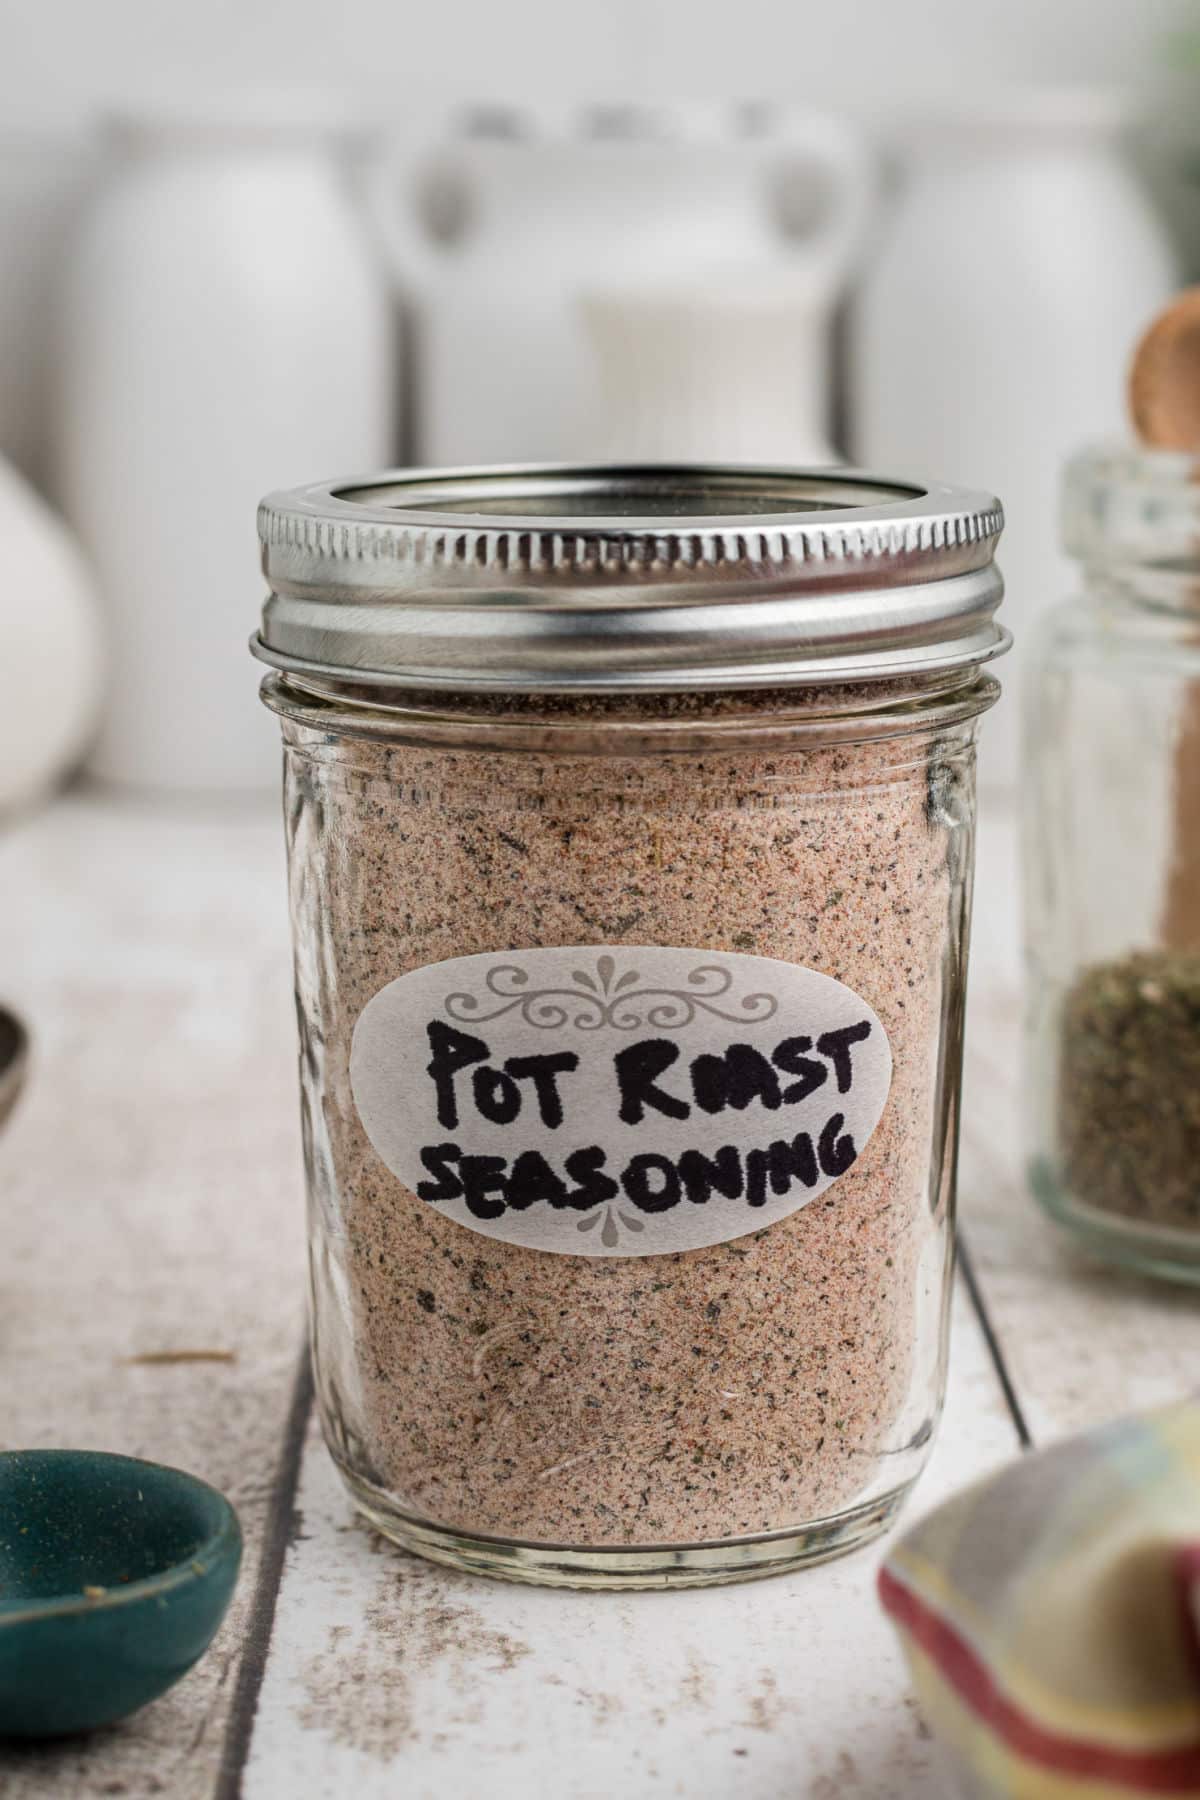 Mason Jar with pot roast seasoning inside, a label saying pot roast seasoning.